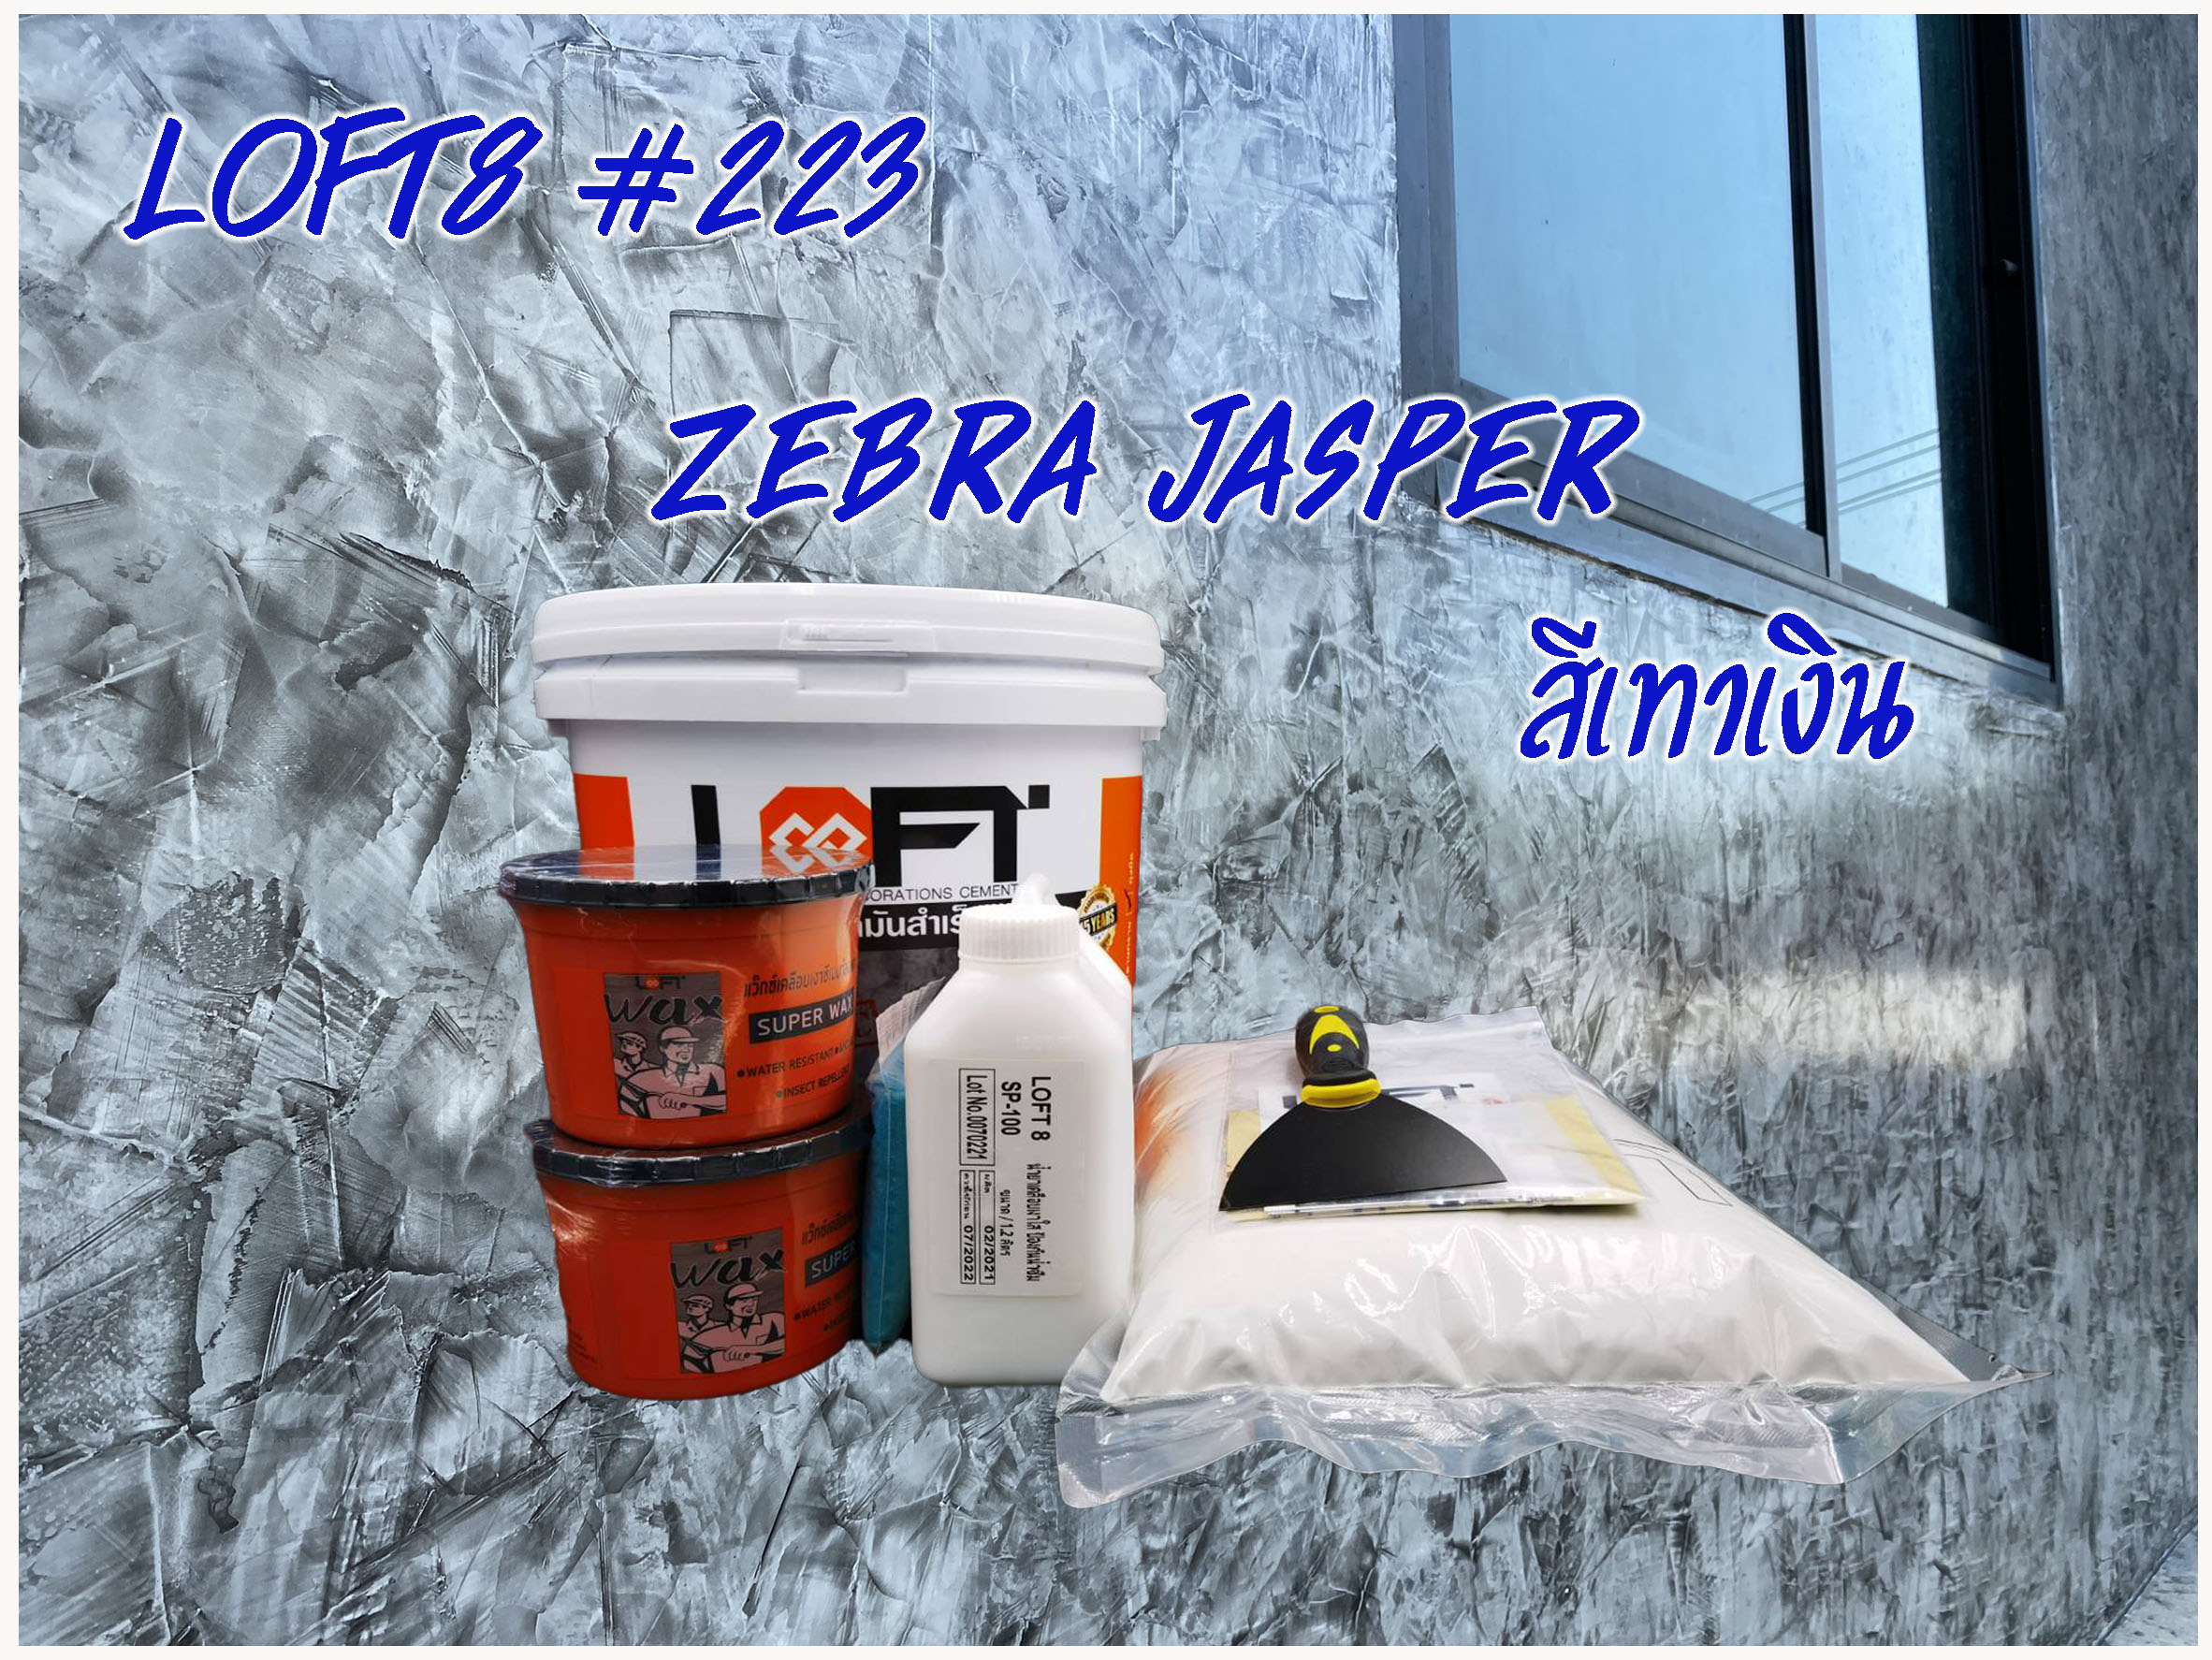 LOFT8 ซีเมนต์ขัดมันสำเร็จรูปสไตล์ลอฟท์ 13 KG สีเทาเงิน เบอร์ 223 / Set Loft 8 #223 Zebra Jasper